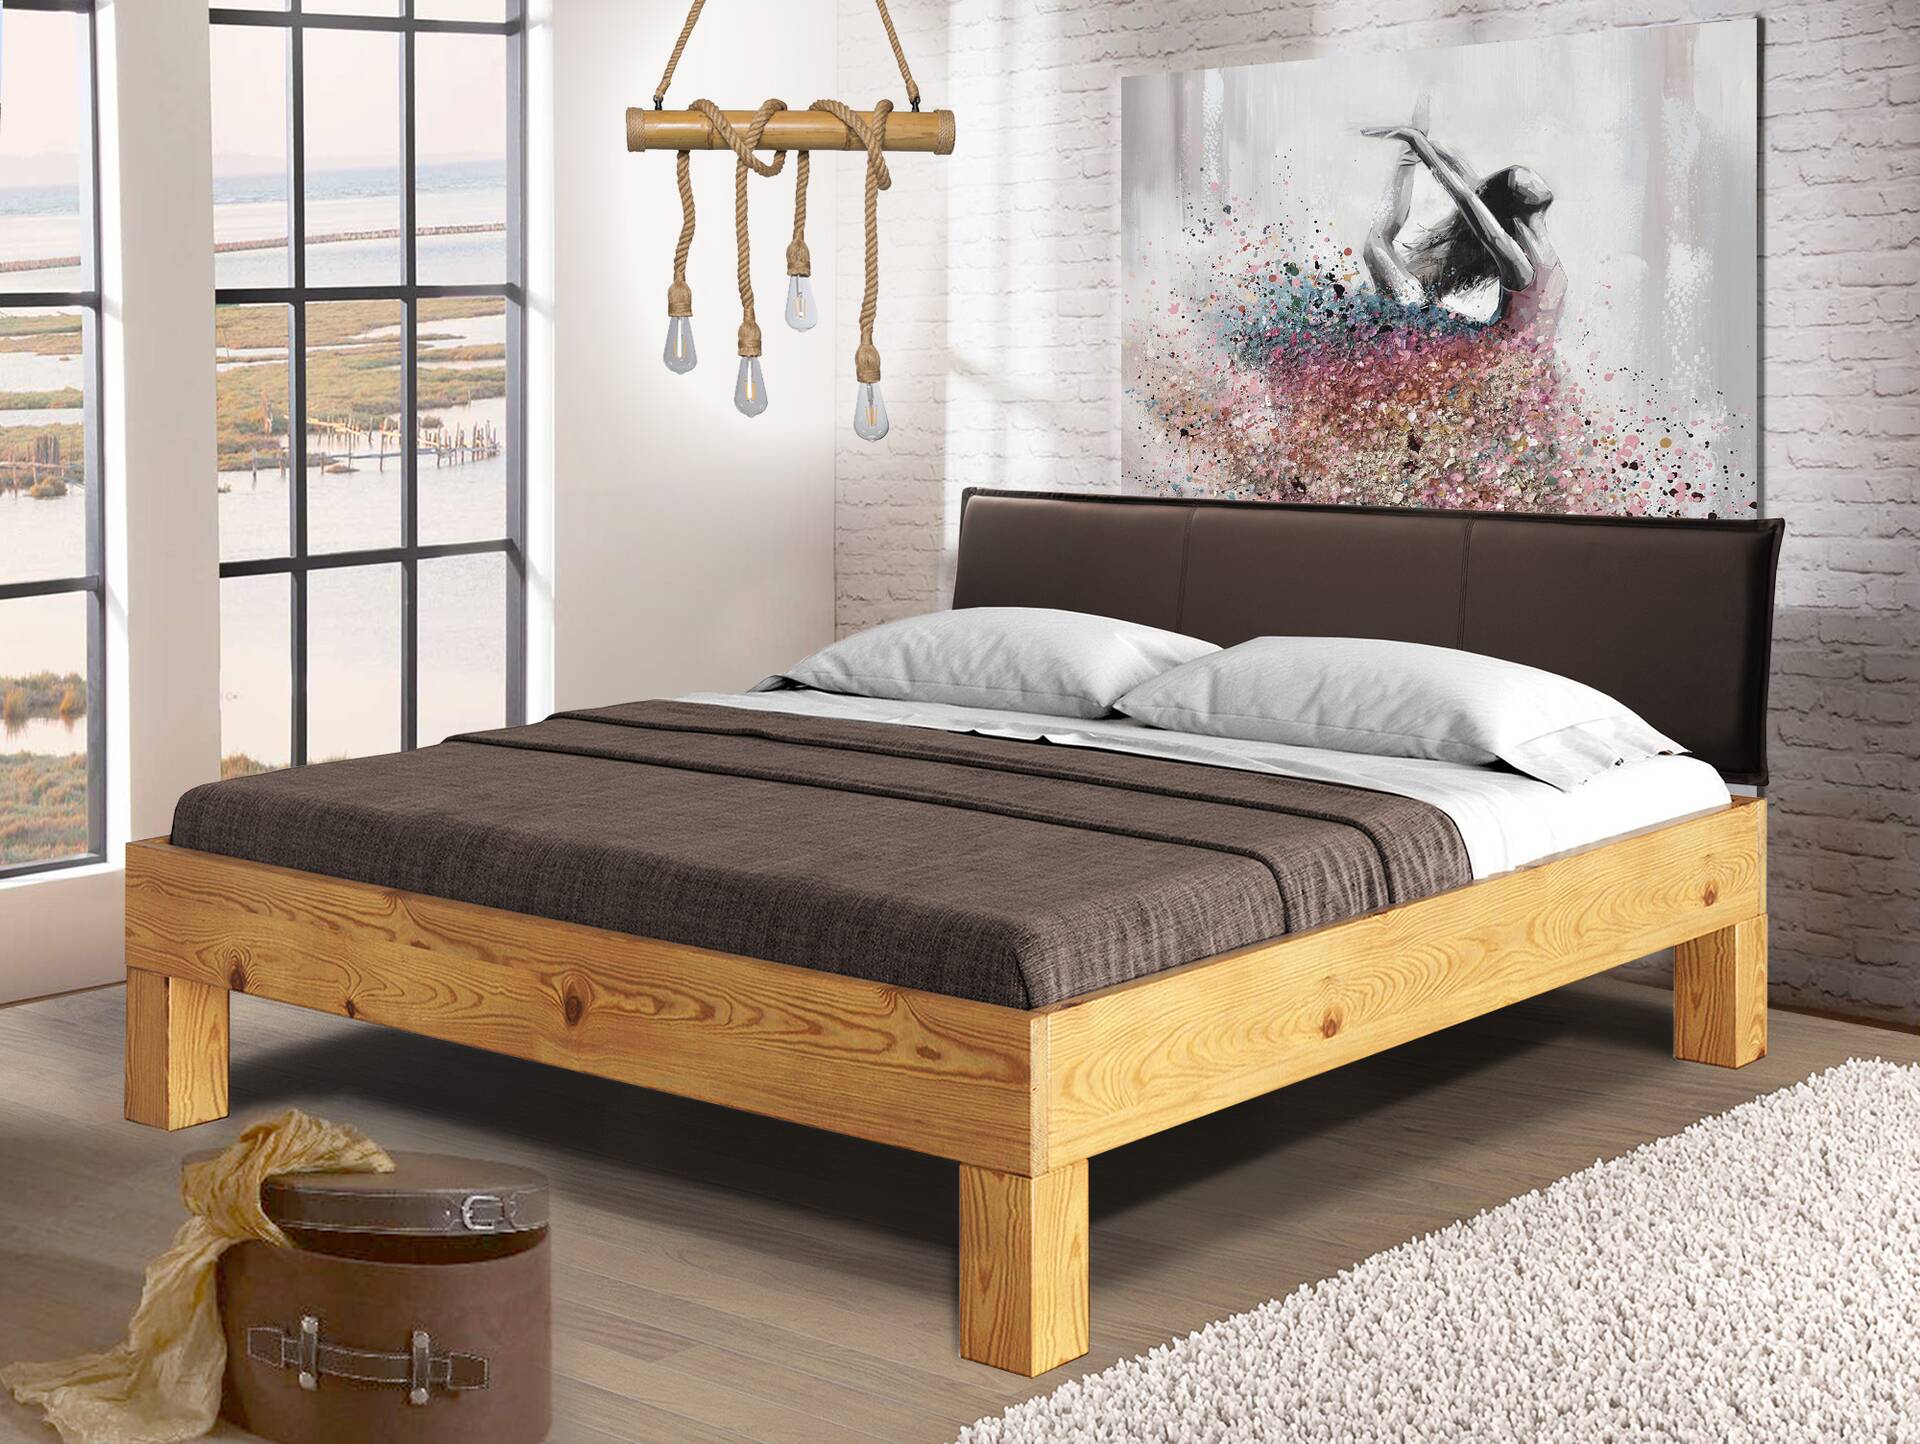 CURBY 4-Fuß-Bett mit Polster-Kopfteil, Material Massivholz, rustikale Altholzoptik, Fichte 90 x 200 cm | natur | Kunstleder Braun ohne Steppung | Standardhöhe